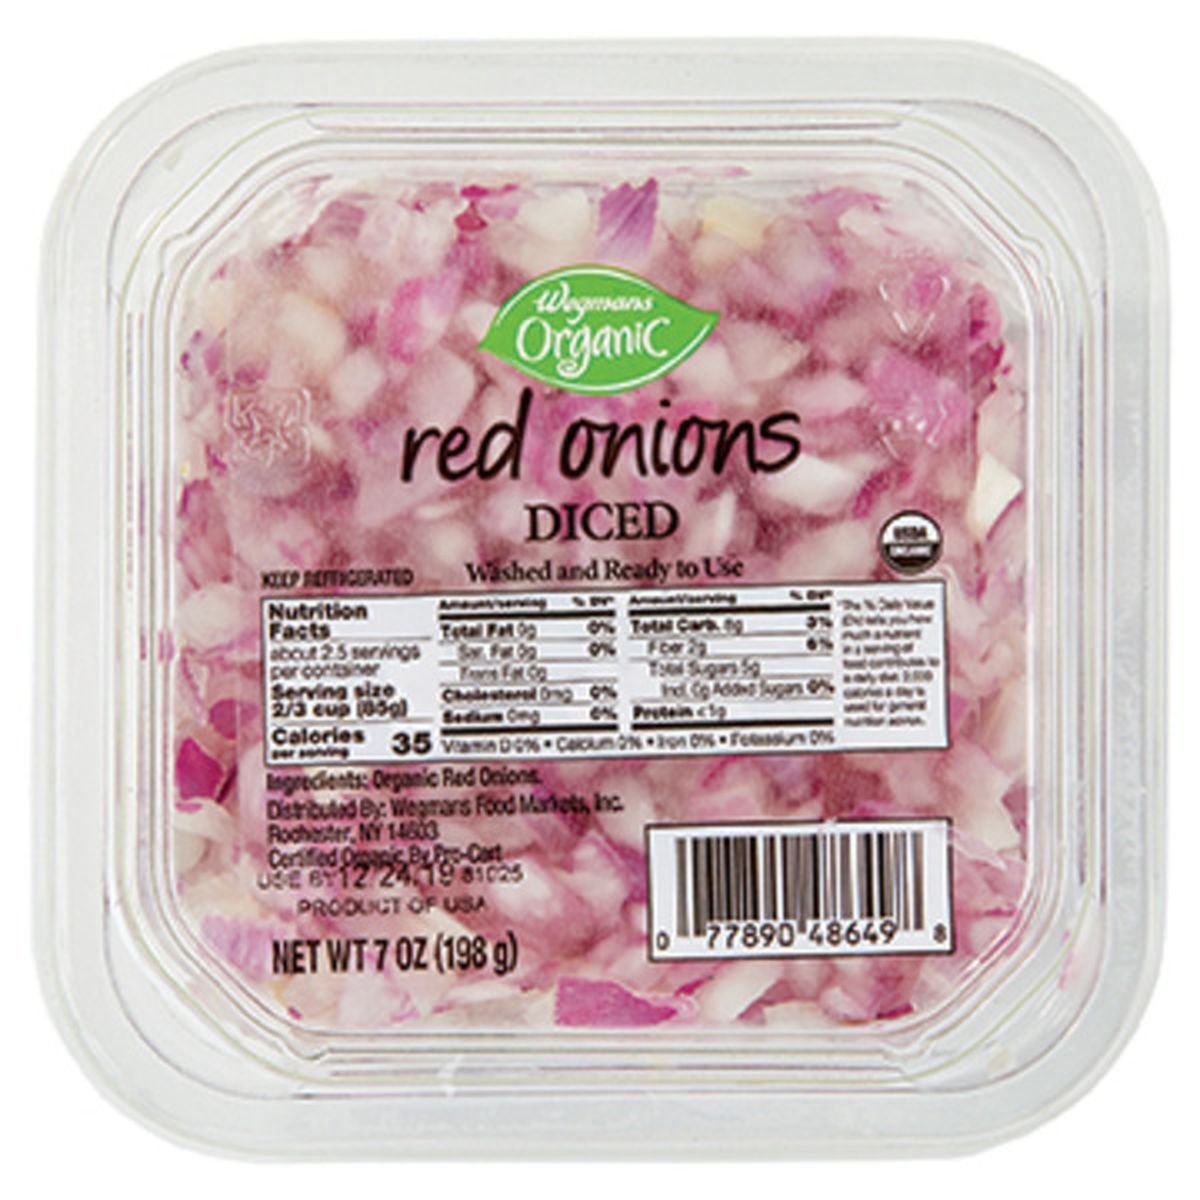 Calories in Wegmans Organic Red Onions Diced